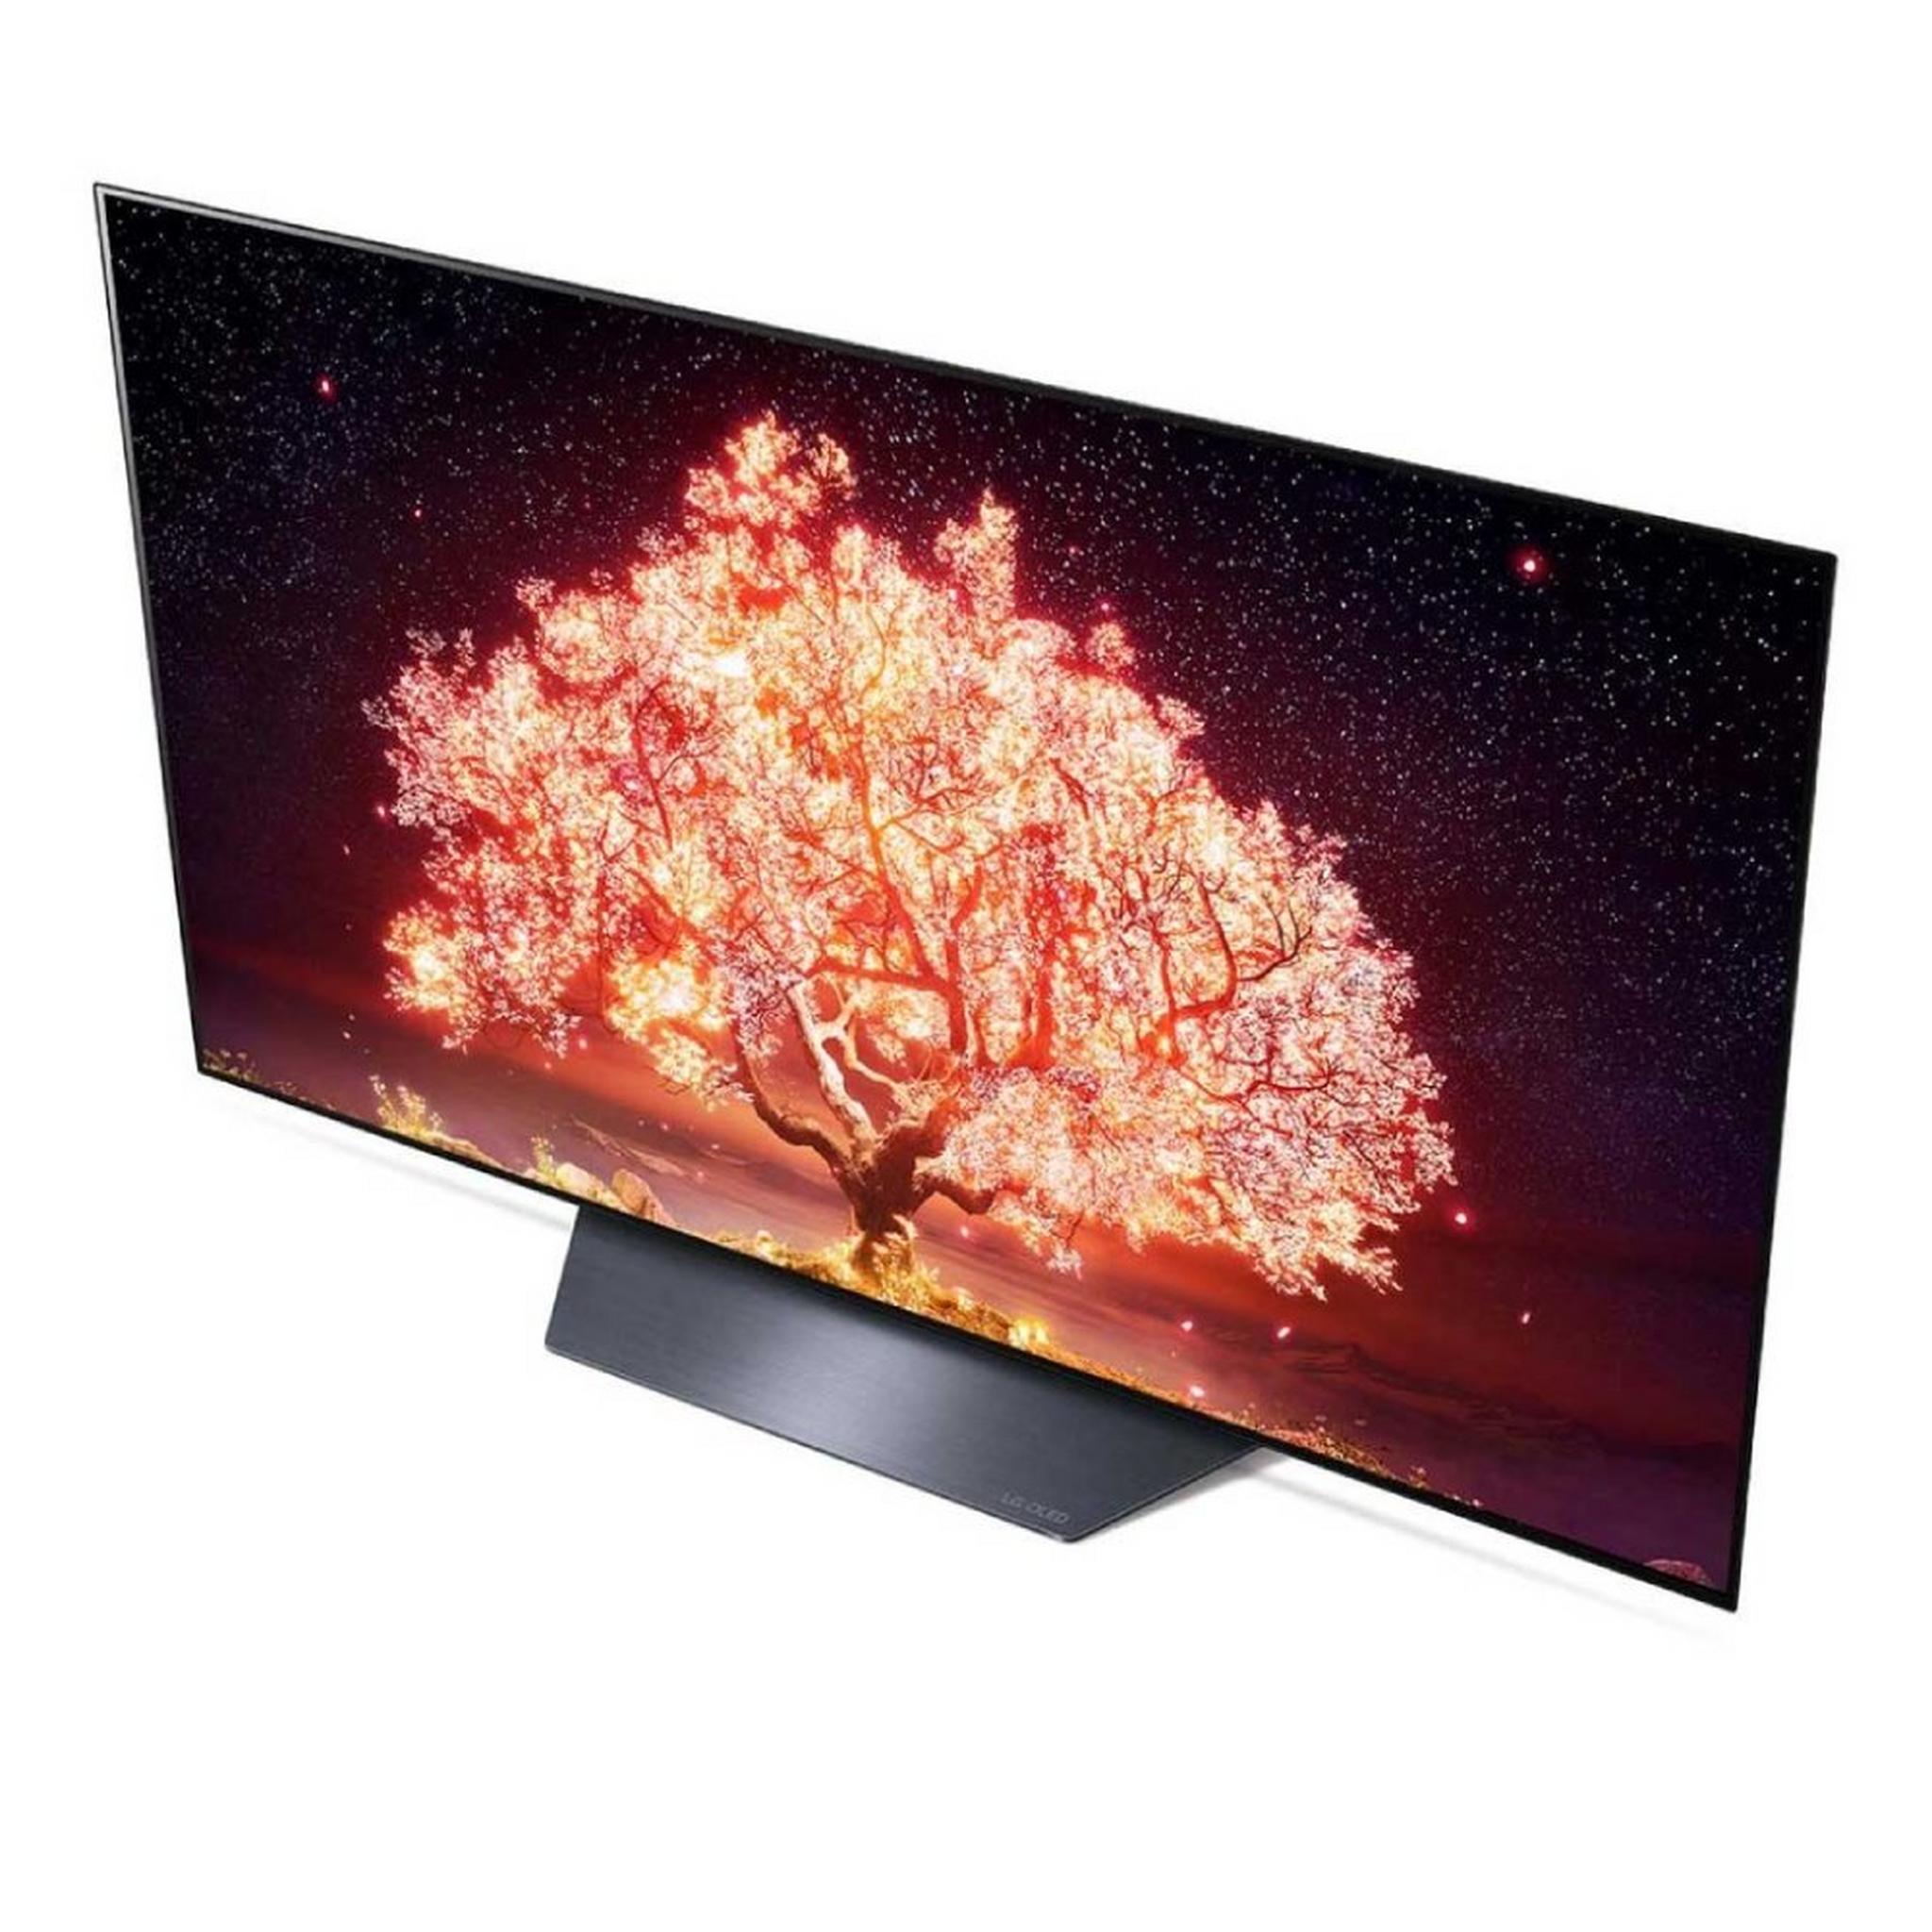 تلفزيون ذكي او ال اي دي 4كي بحجم 65 بوصة من ال جي (OLED65B1)